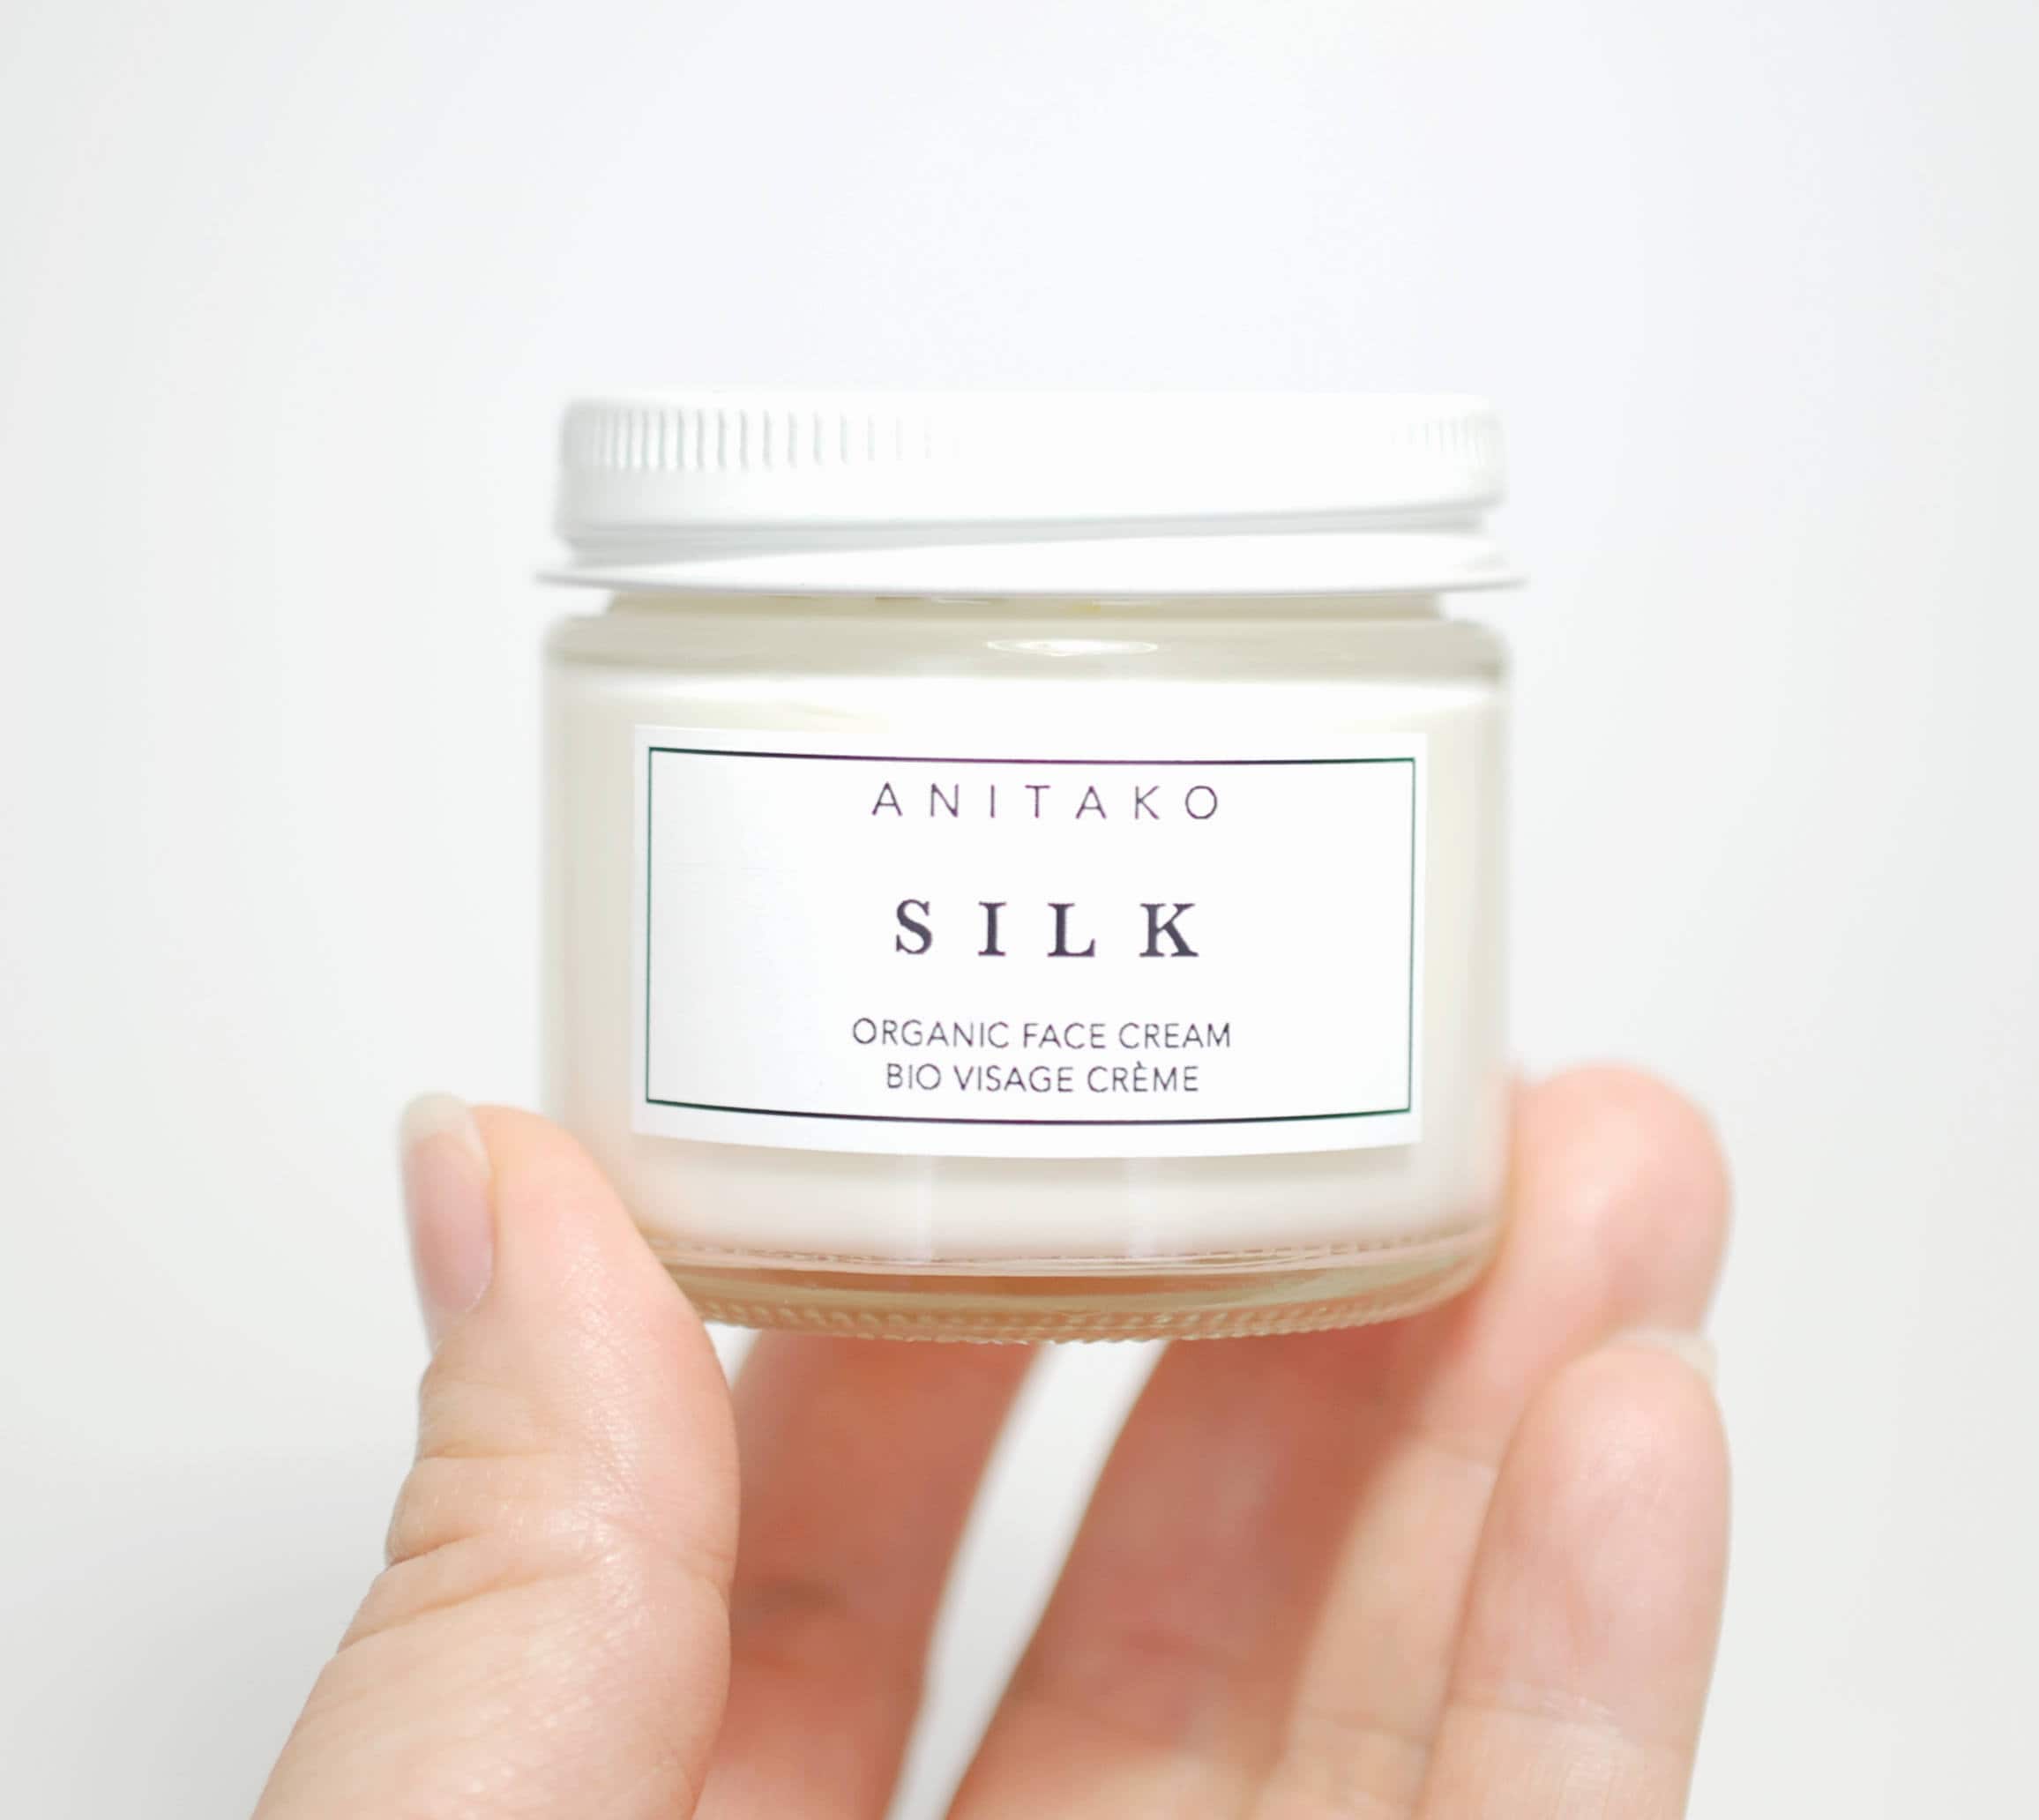 S I L K Organic Face Cream Silk Peptide Moisturizer for image pic